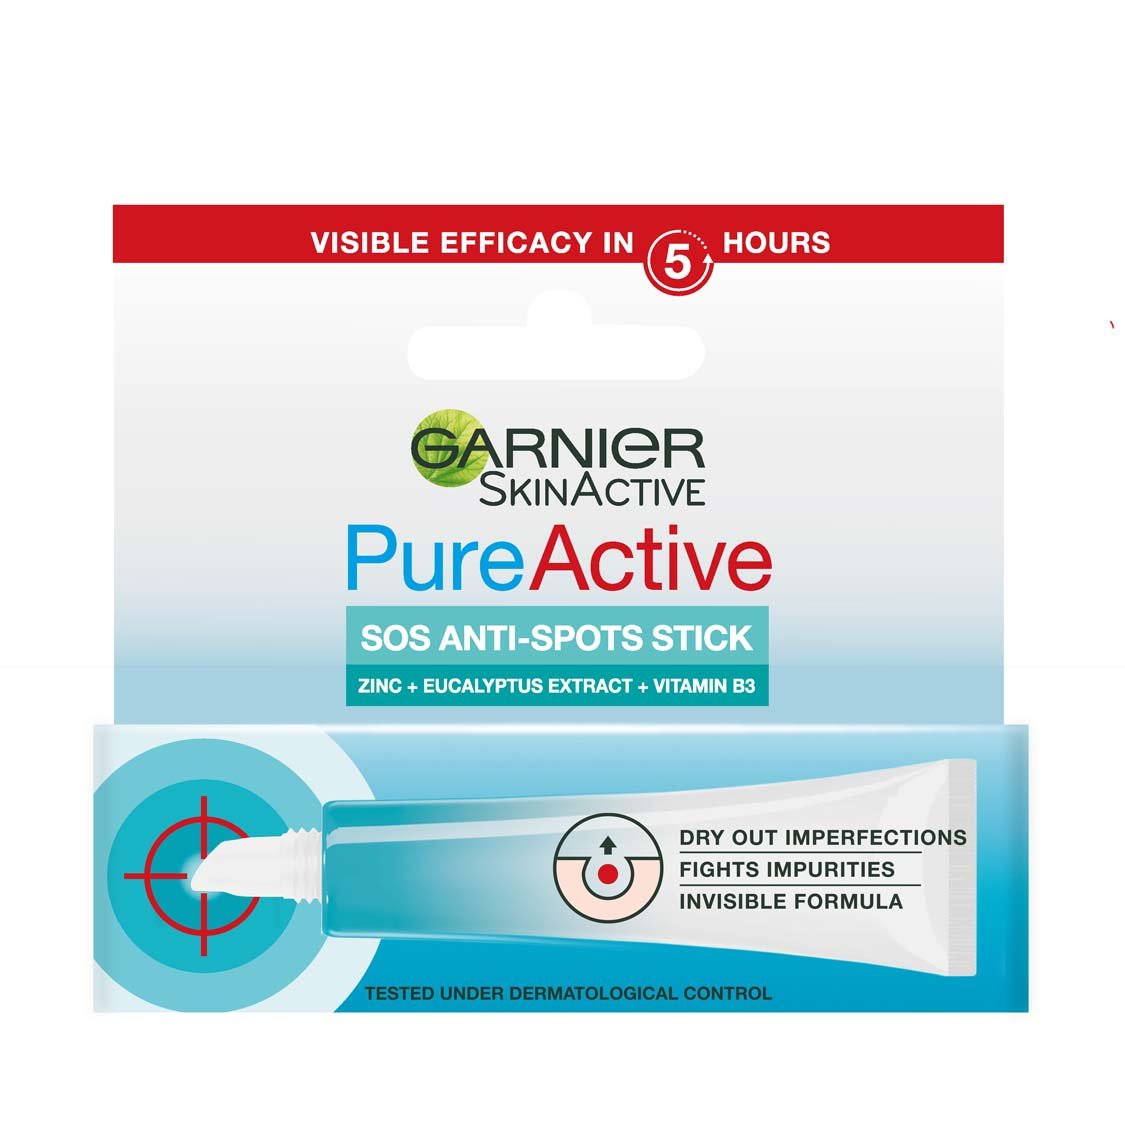 3600542388054 Garnie Skin active PureActive sos antispots stick